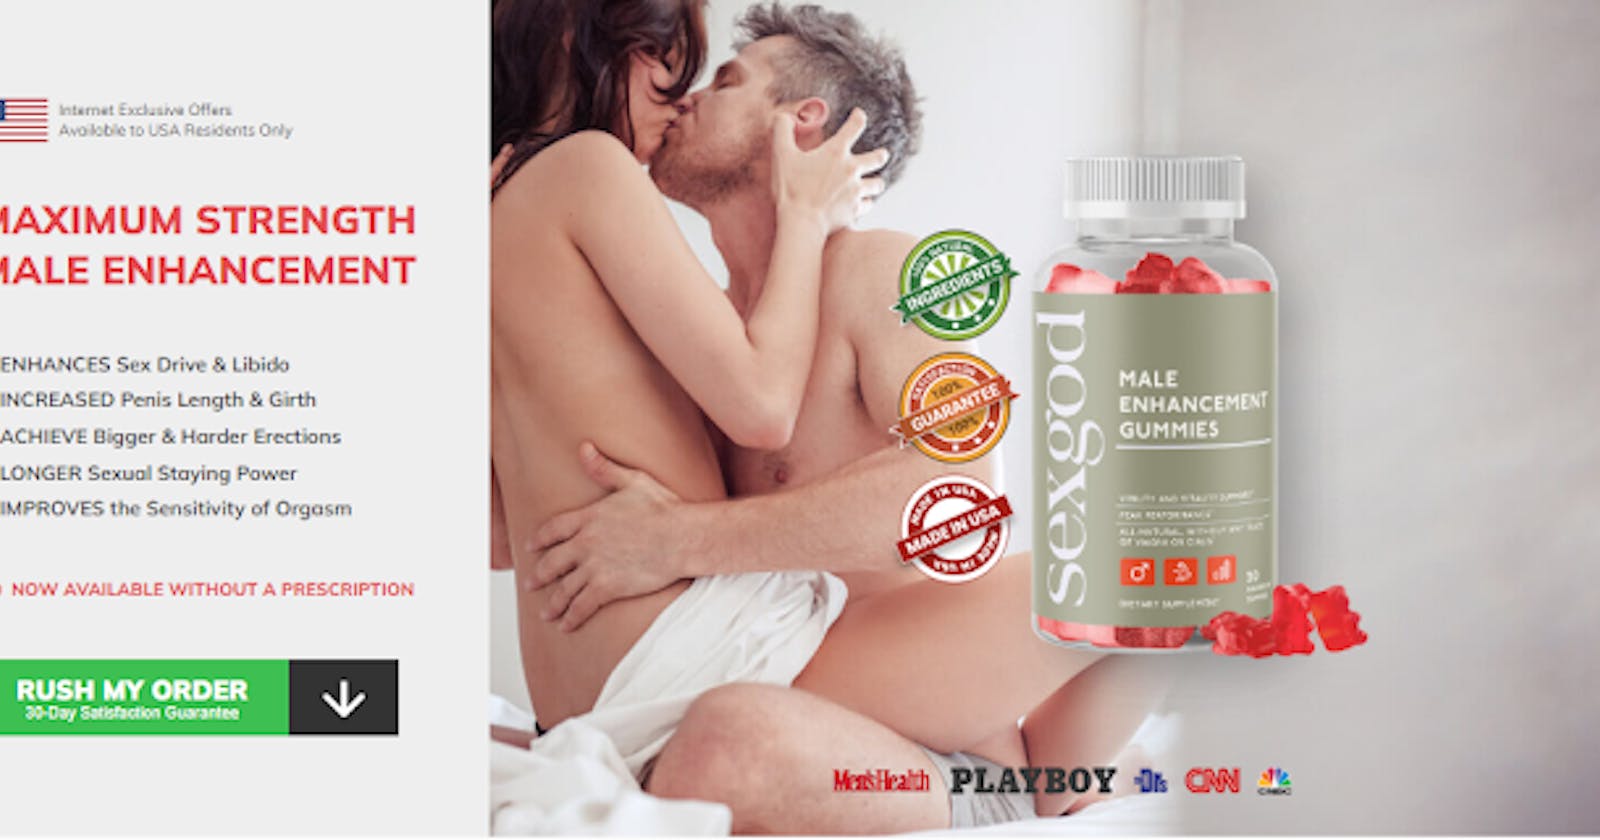 Sexgod Male Enhancement Gummies Reviews: A Safe and Effective Alternative to Viagra!